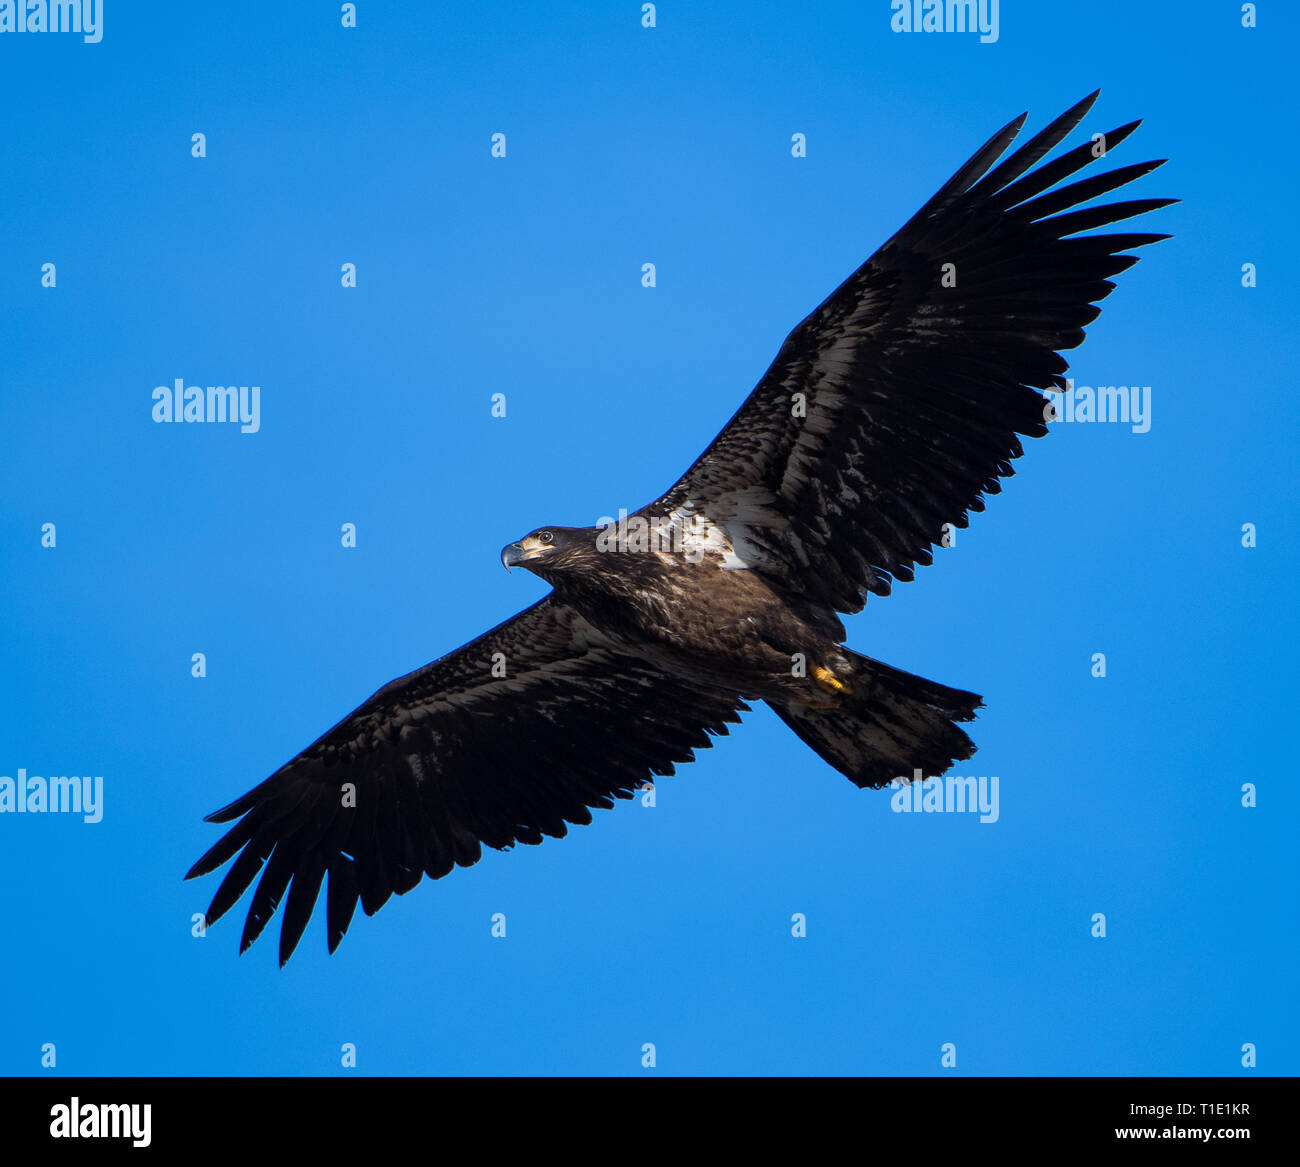 Bald eagle soaring against a bright blue sky. Stock Photo